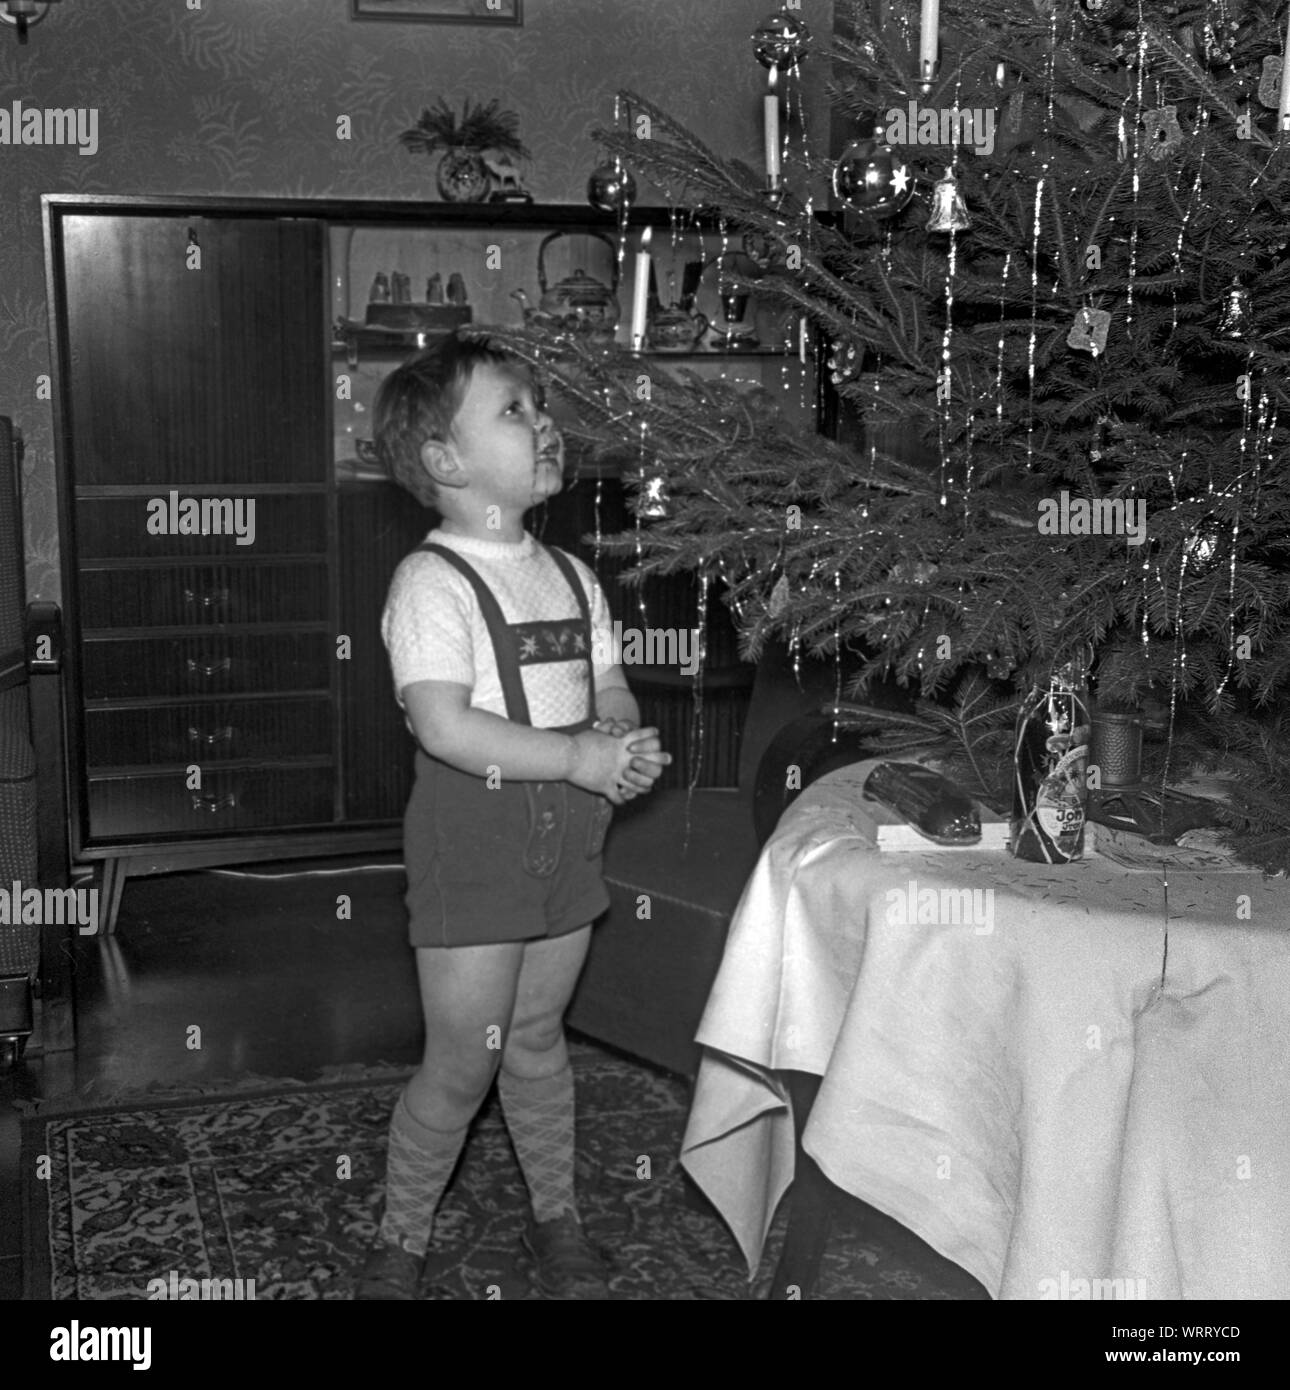 Europa, Deutschland, Amburgo, Weihnachten 1957, kleiner Junge steht am Heiligen Abend staunend vor dem Weihnachtsbaum . / Europa, Germania, Amburgo, tempo di Natale 1957, Little Boy sorge in segno di stupore per la Vigilia di Natale nella parte anteriore dell'albero di Natale . Foto Stock